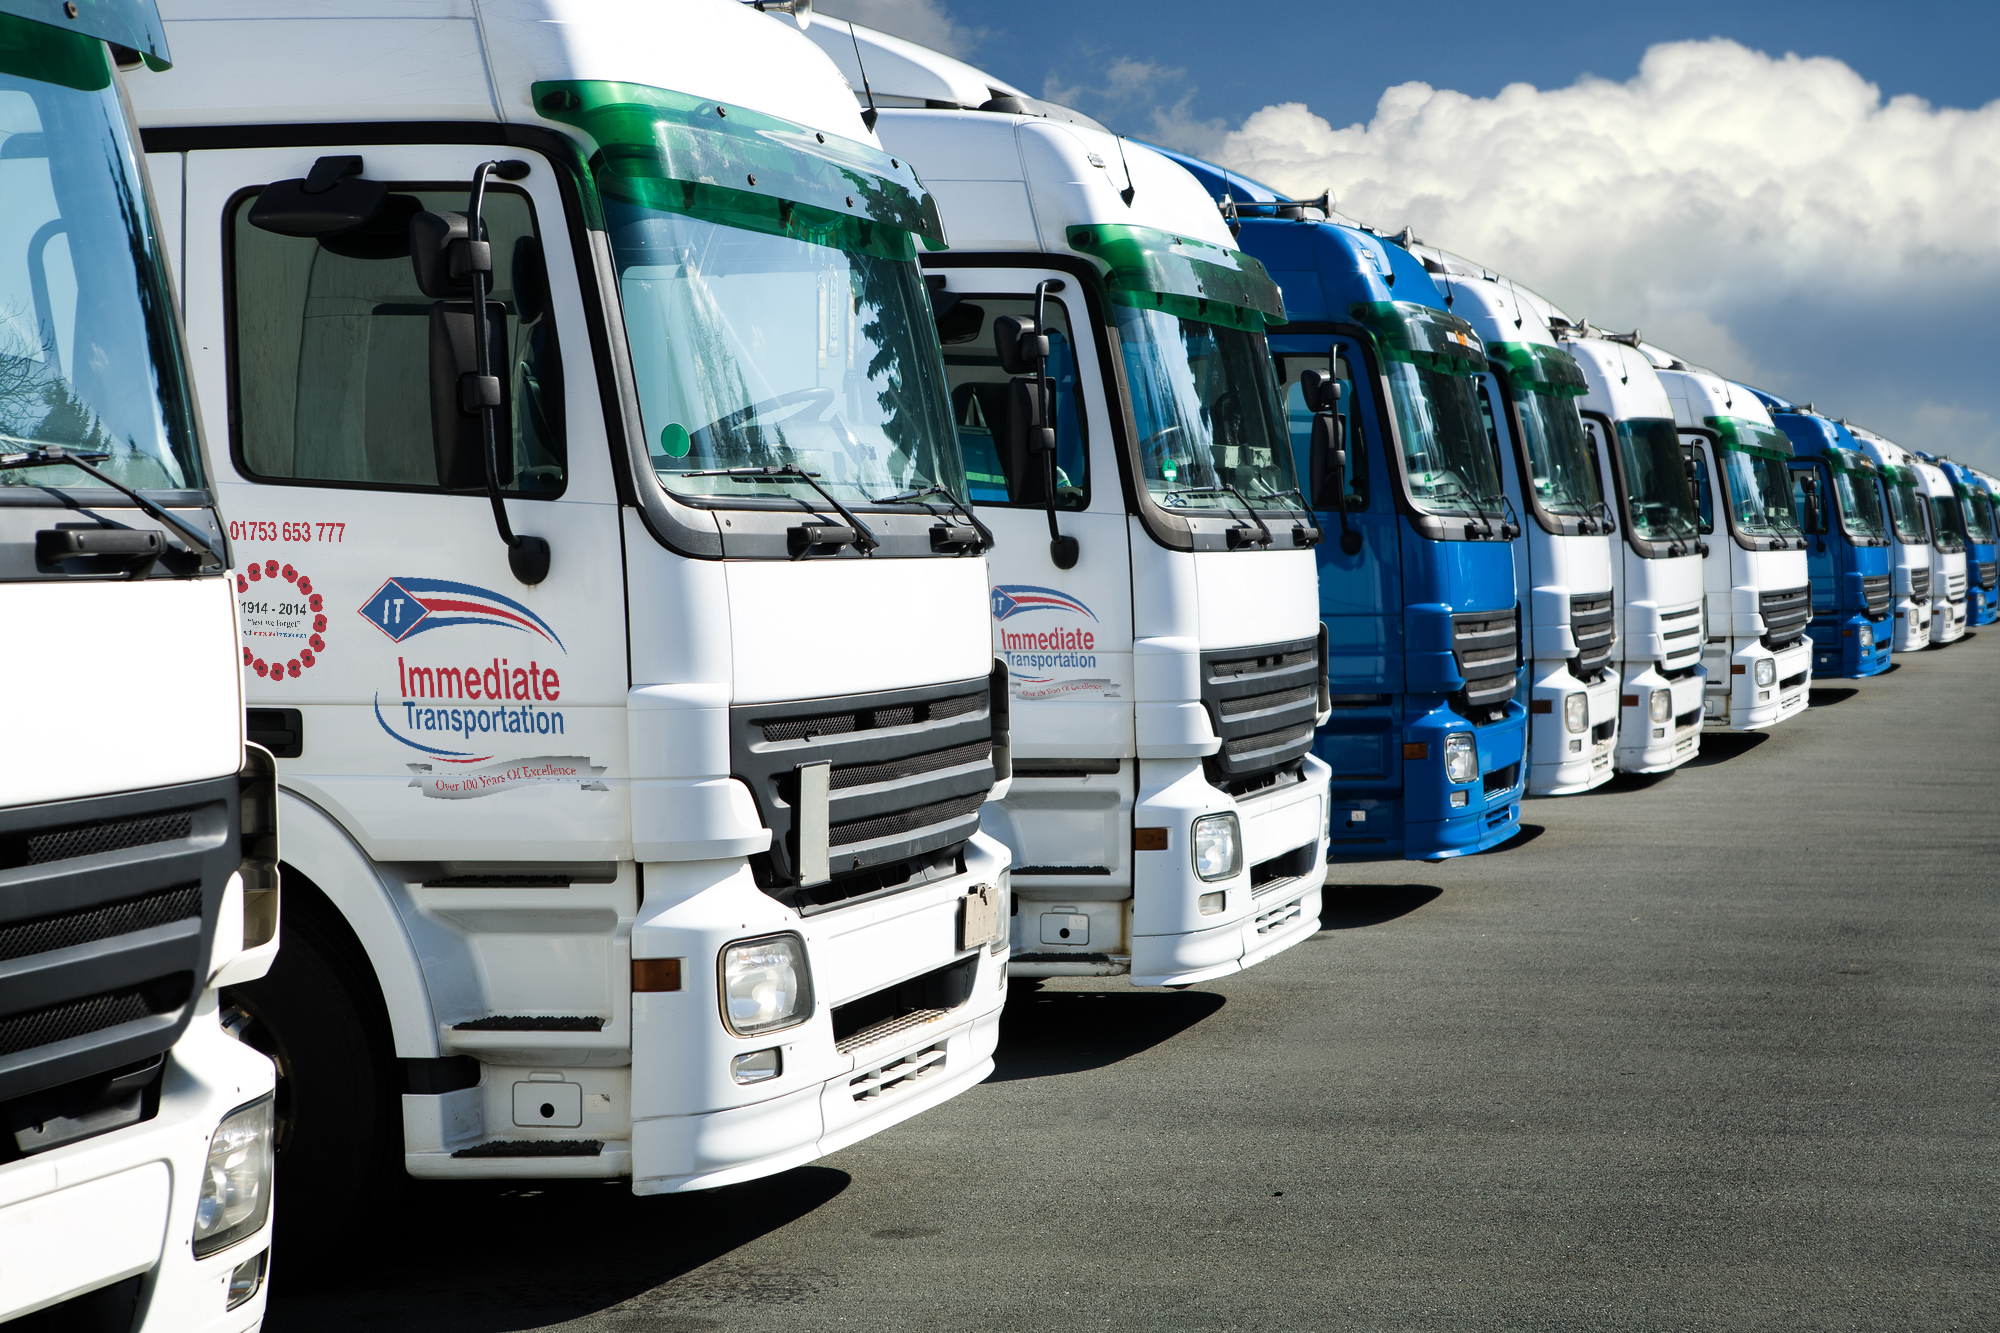 Immediate Transport lorries